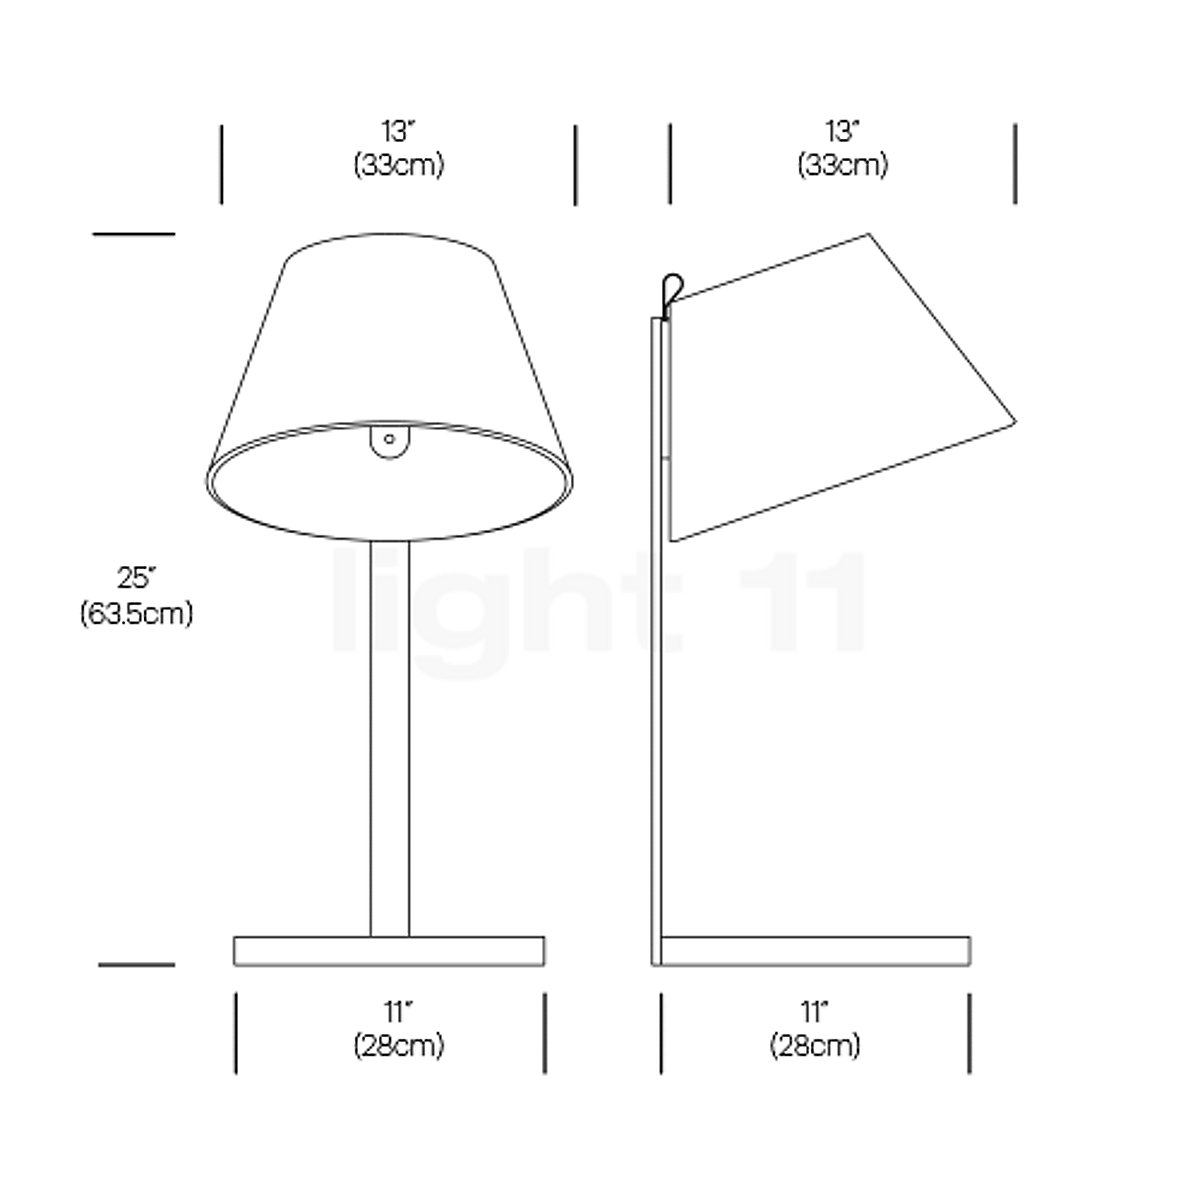 Pablo Designs Lana Table Lamp Large Led, Table Lamp Standard Size